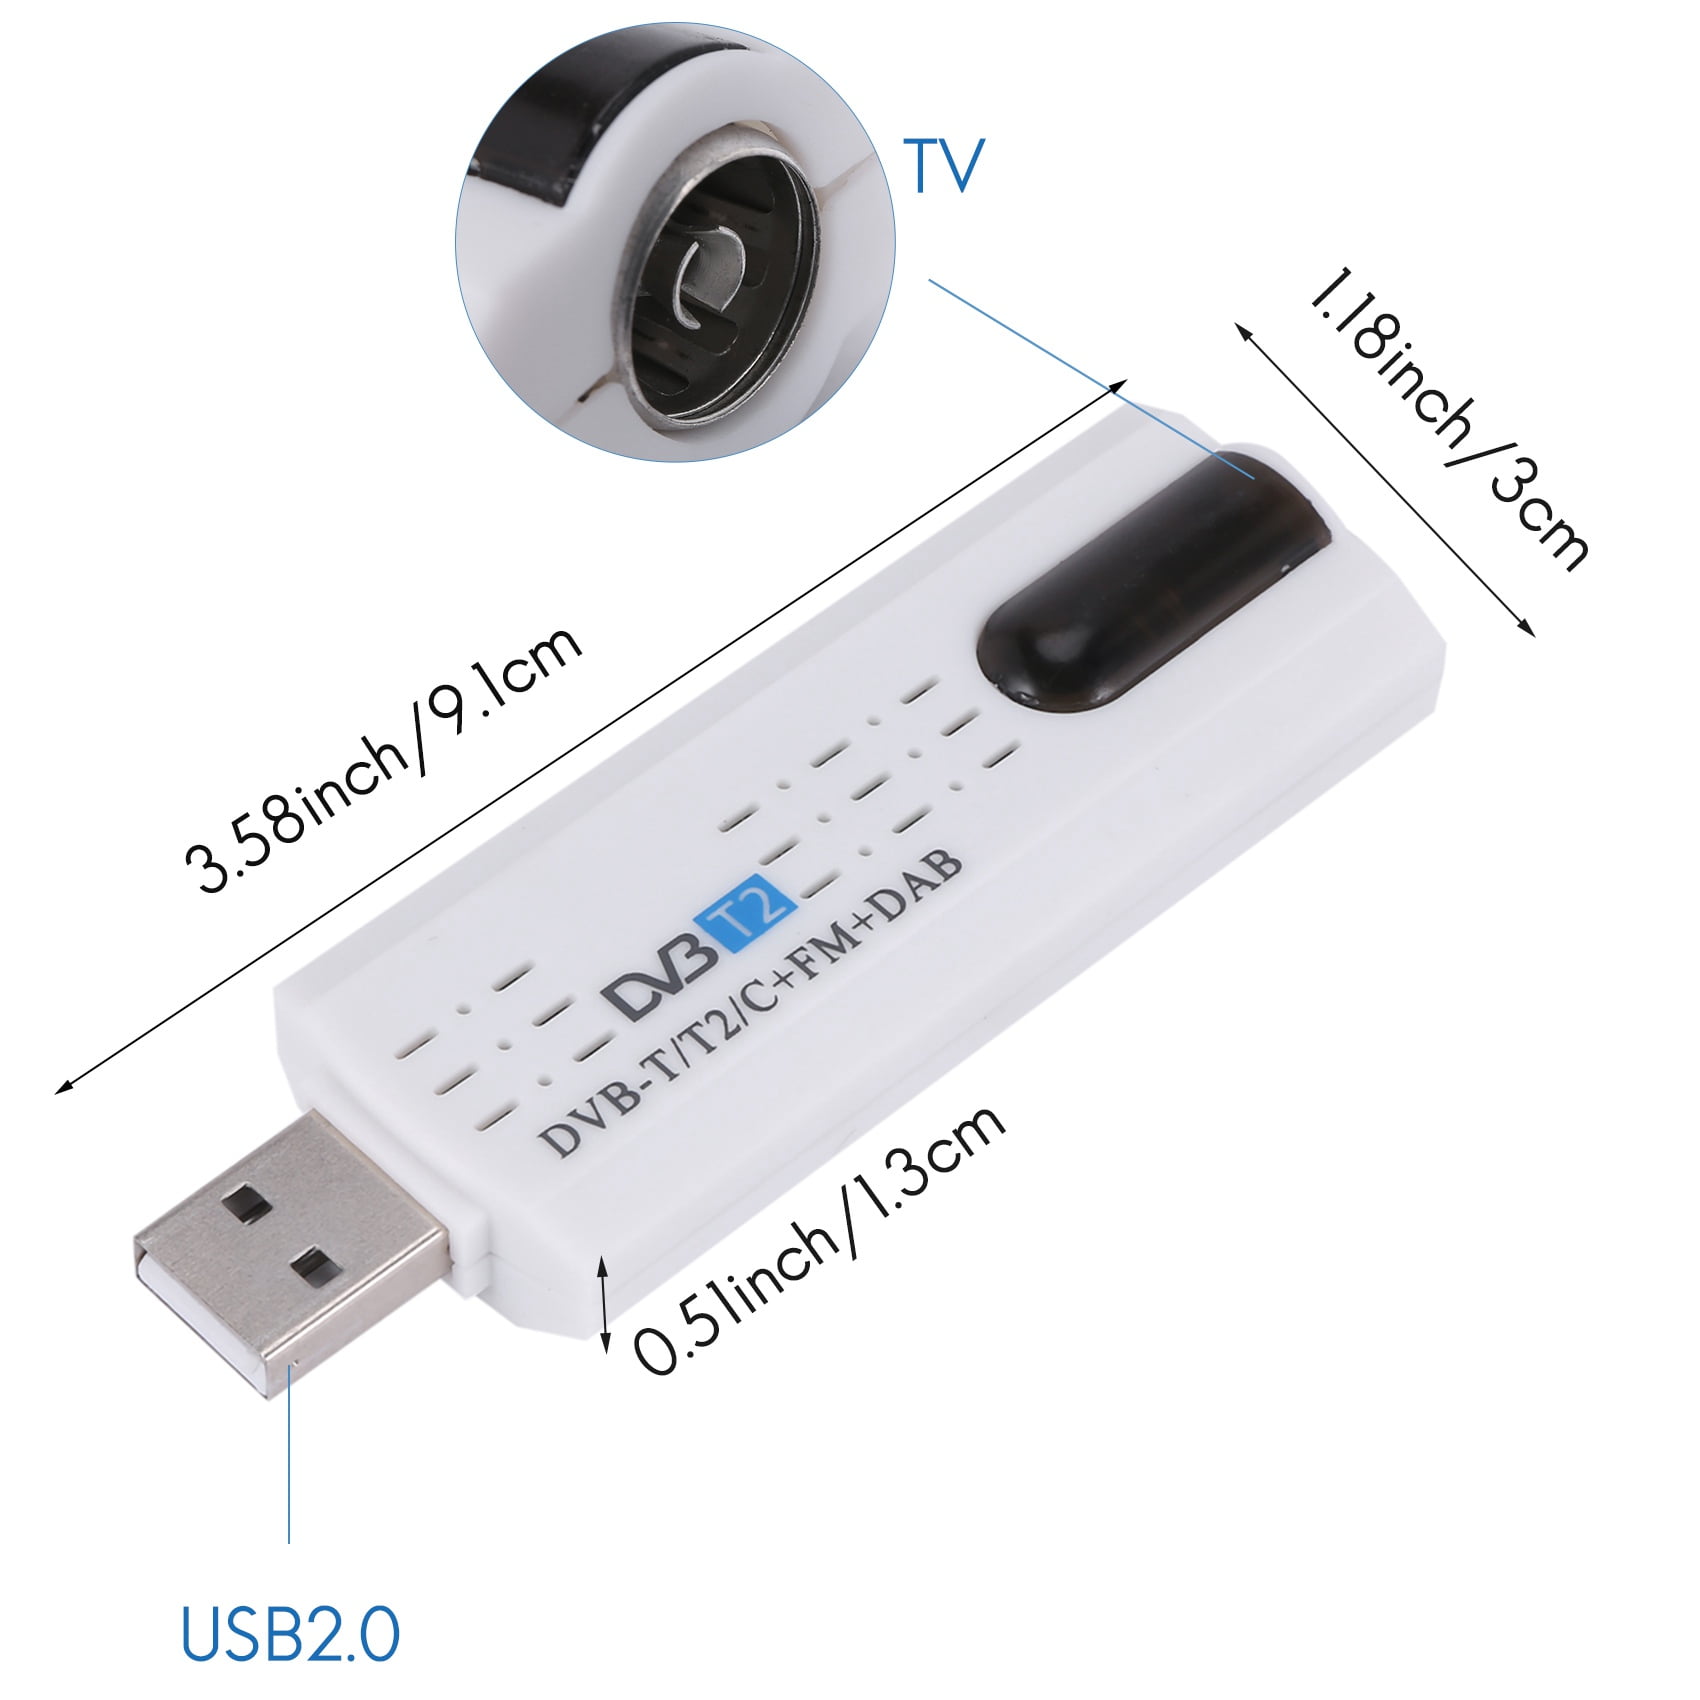 USB 2.0 DVB-T2 FM DAB TV Tuner HDTV Stick Receiver TV Dongle for PC  Computer